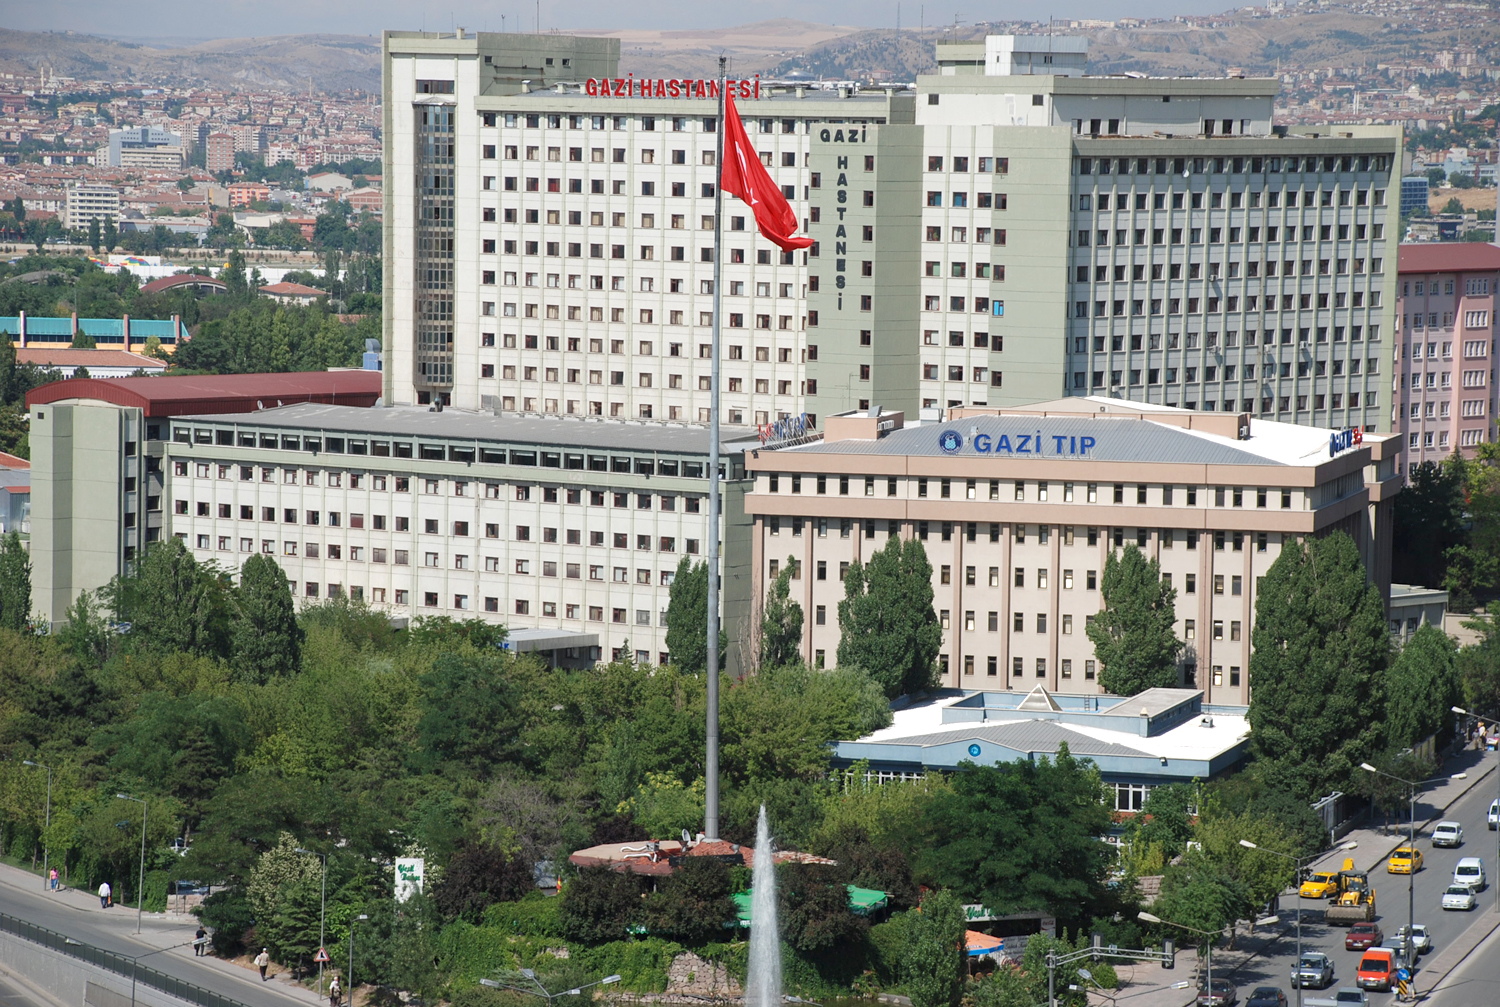 University of Gazi Turkish